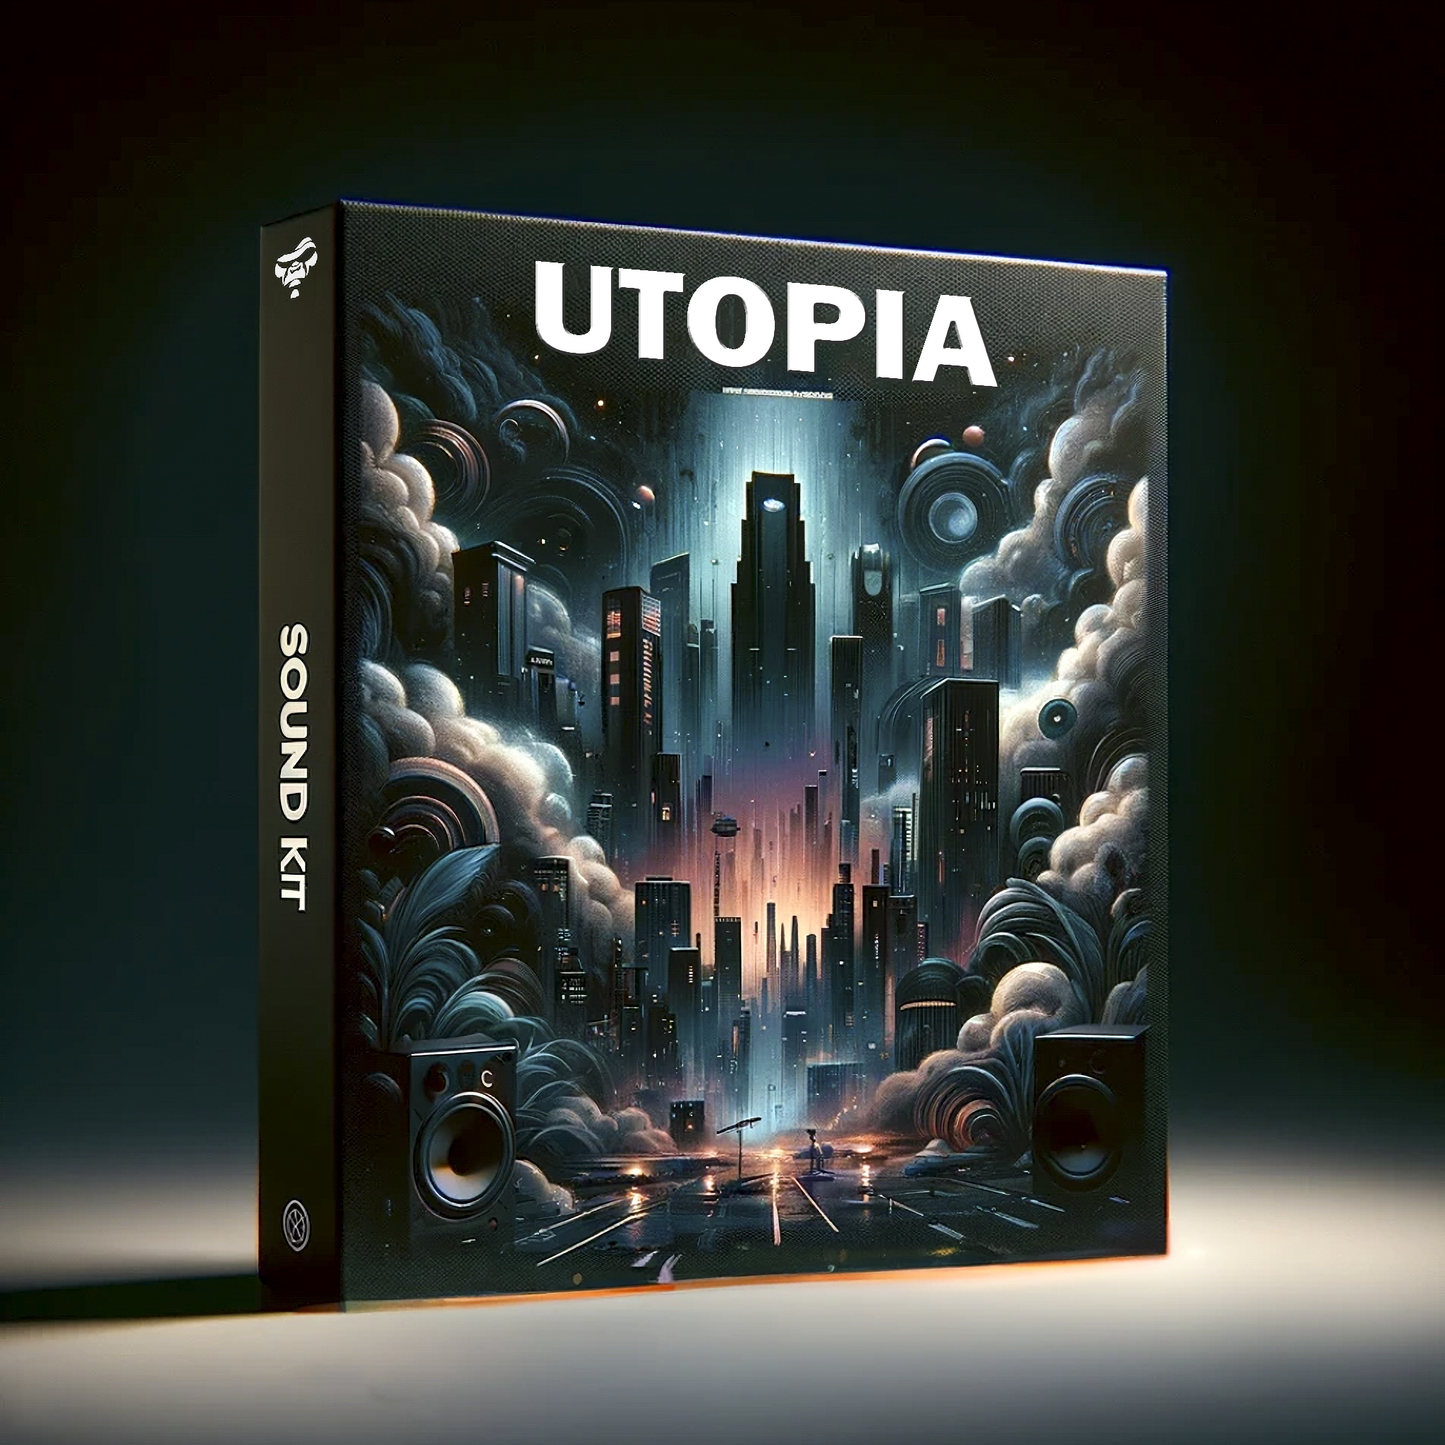 Trap Masters' "UTOPIA" Beta Pack